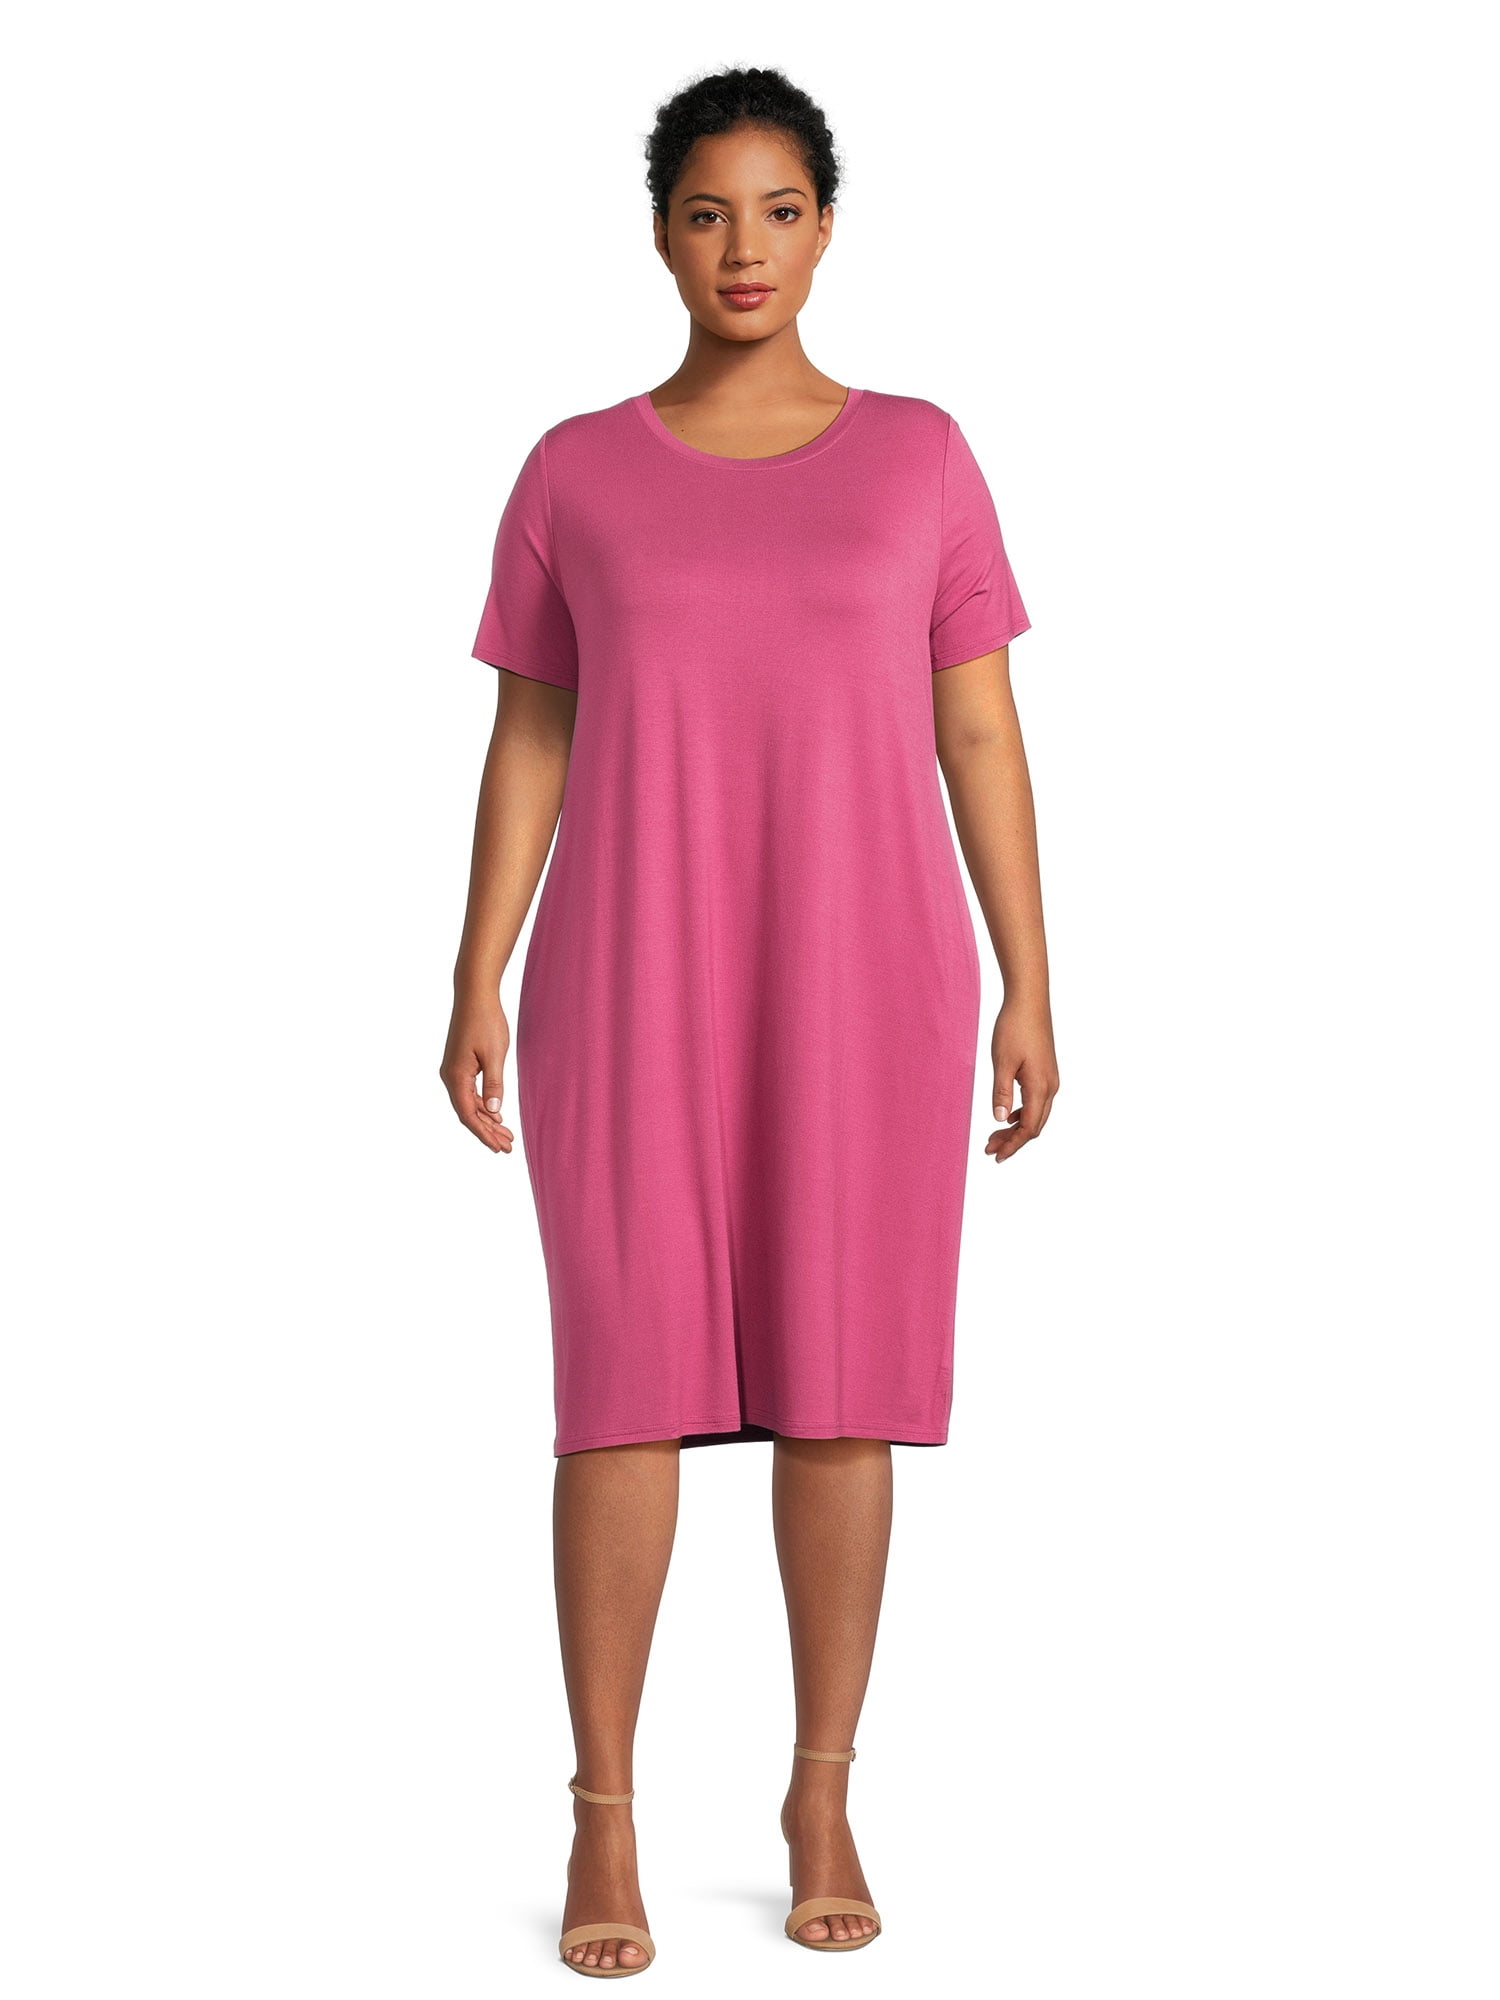 Terra & Sky Women’s Plus Size Crew T-shirt Dress - Walmart.com